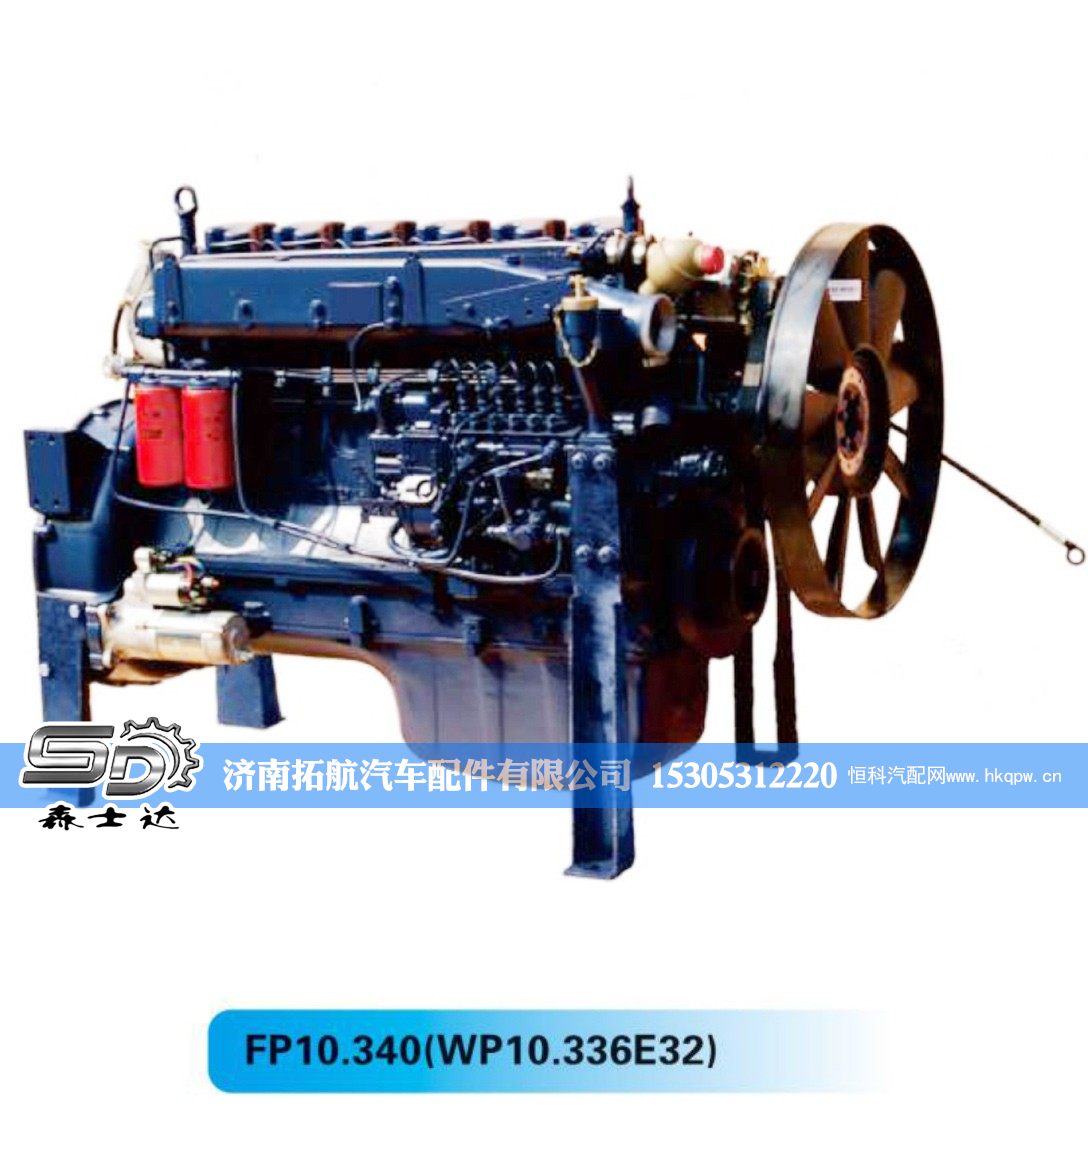 FP10.340(WP10.336E32),潍柴国ⅢWP10系列发动机,济南拓航汽车配件有限公司